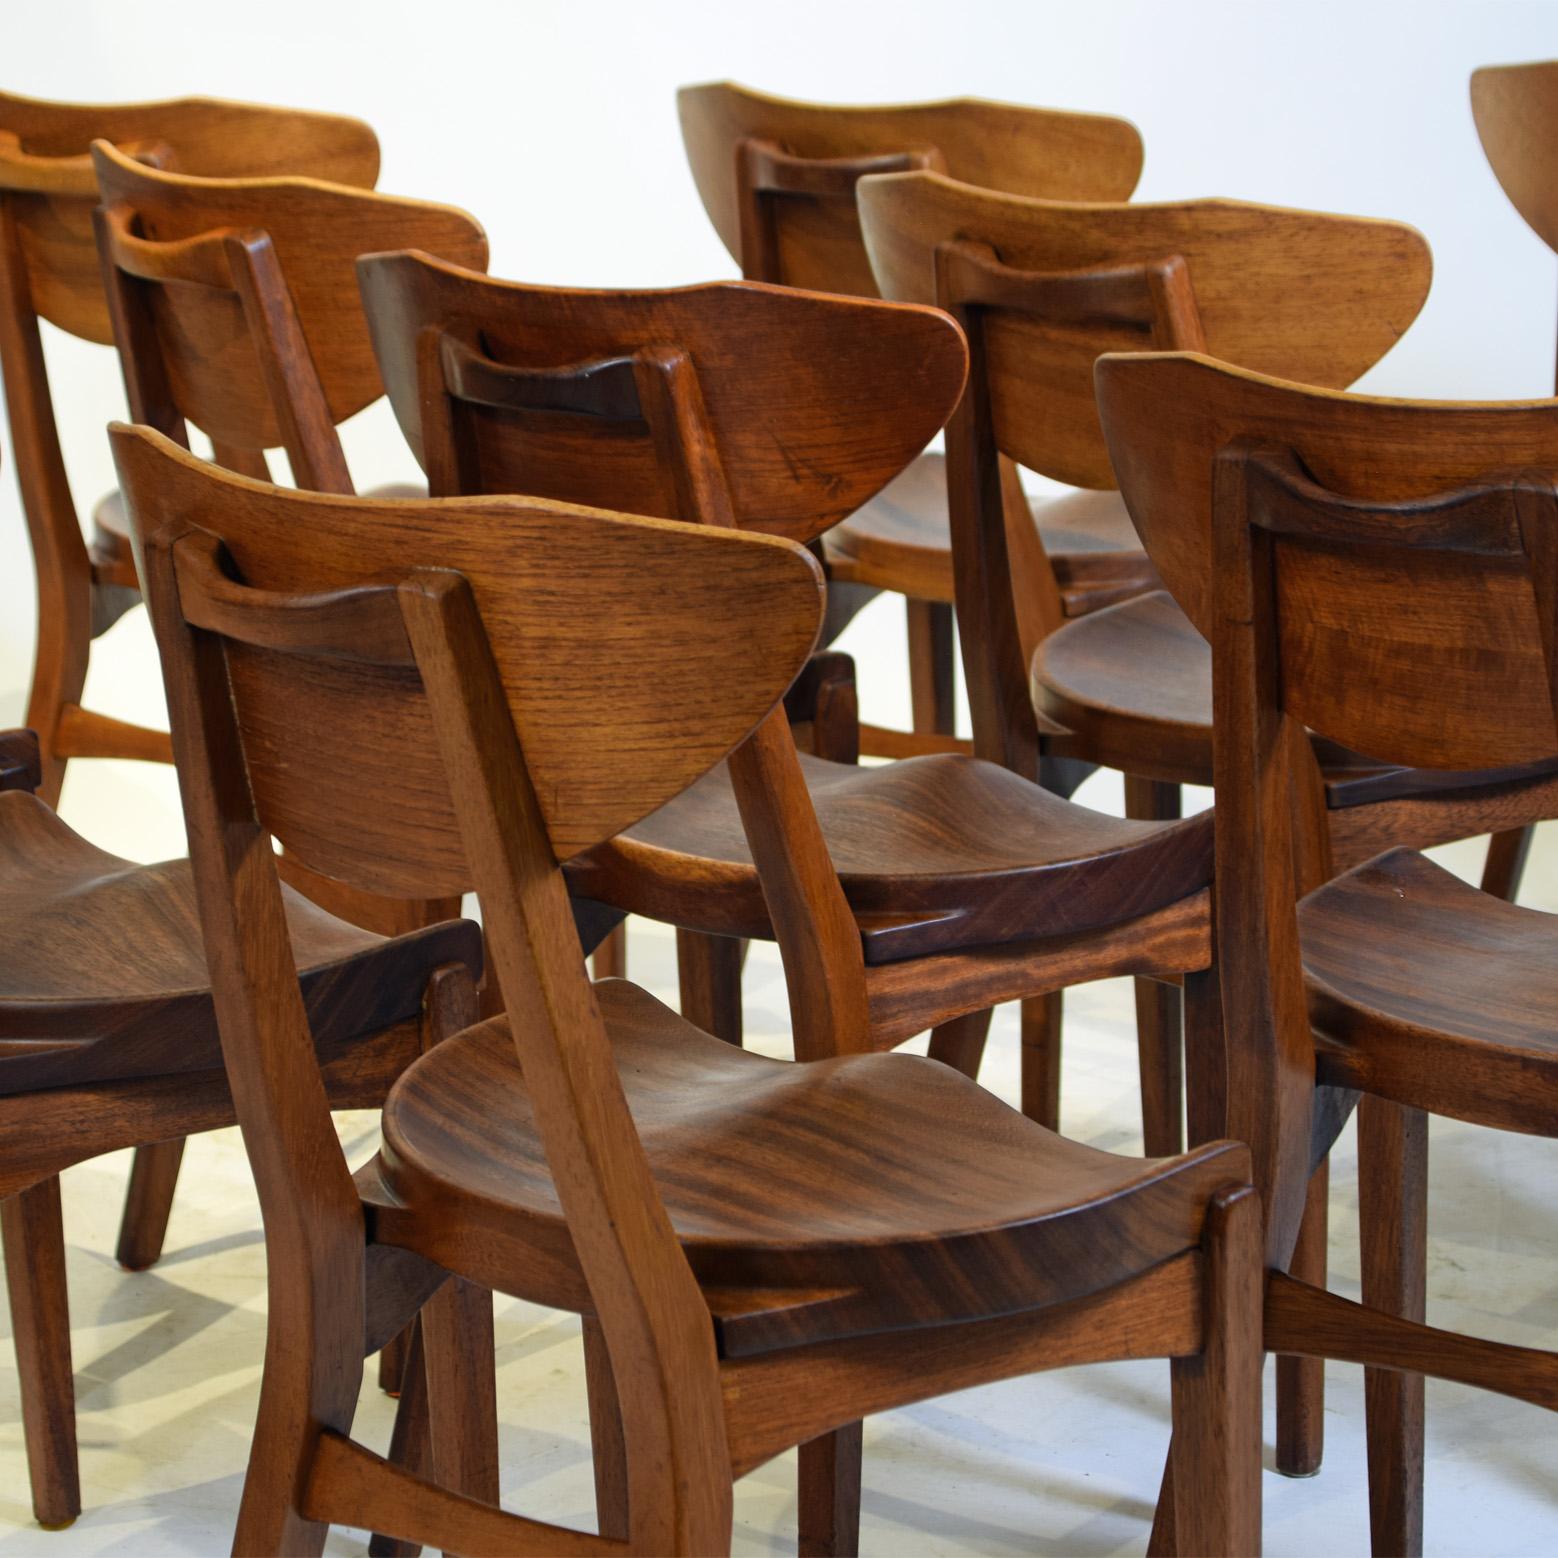 Scandinavian Modern Set of 14 Solid Teak Dining Chairs by Richard Jensen & Kjærulff Rasmussen 1950's For Sale